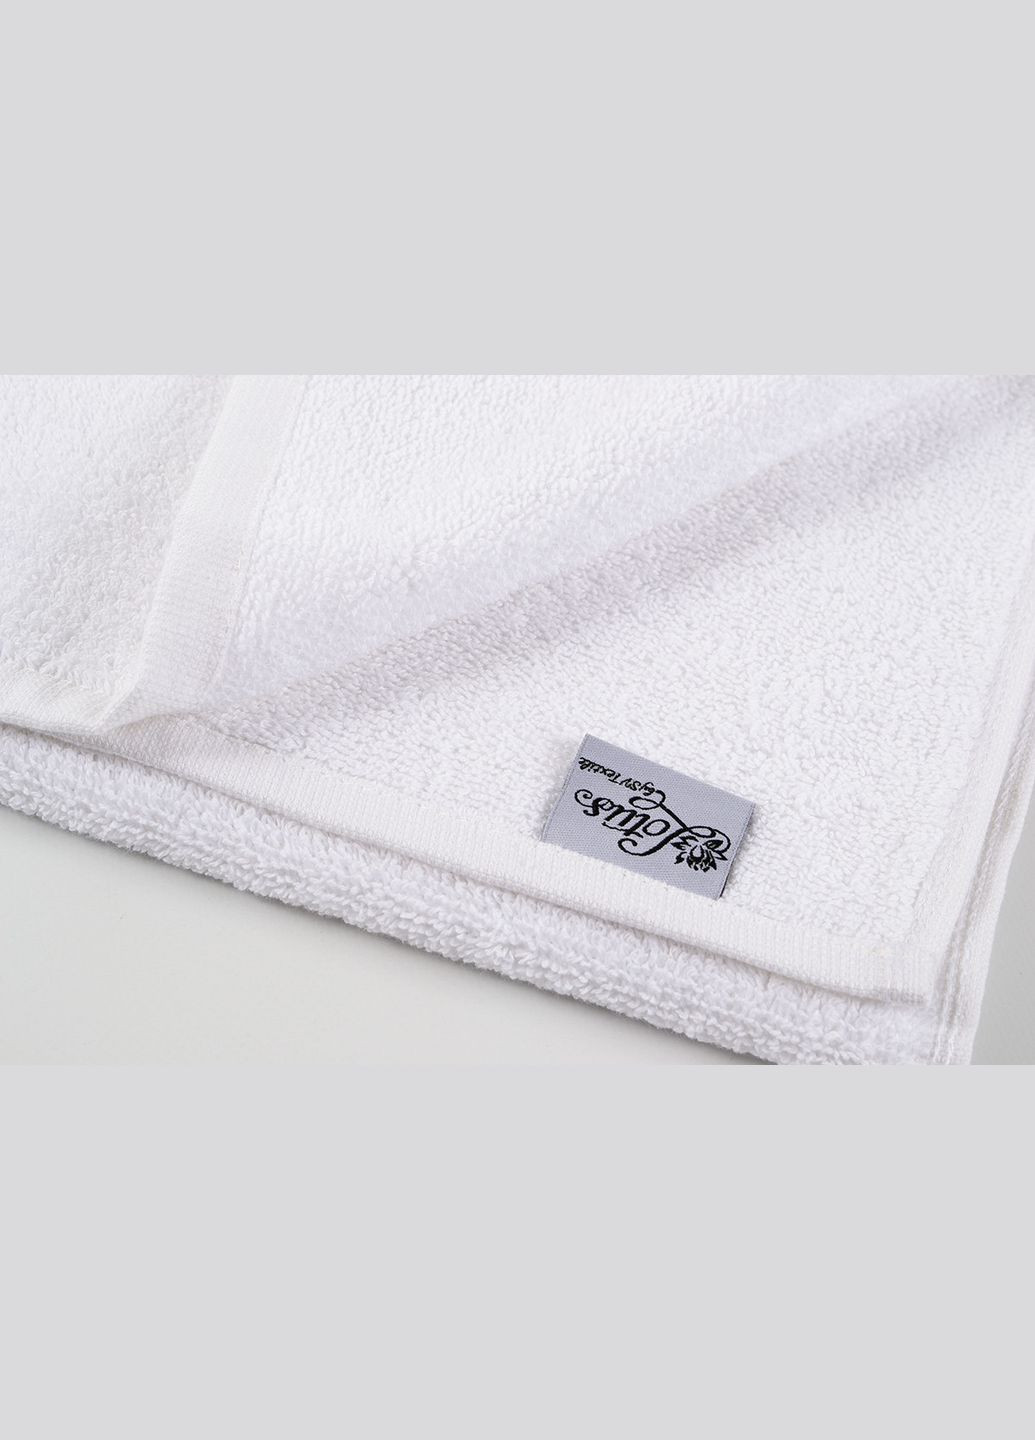 Lotus полотенце отель - 50*90 (20/2) 550 г/м2 белый производство -